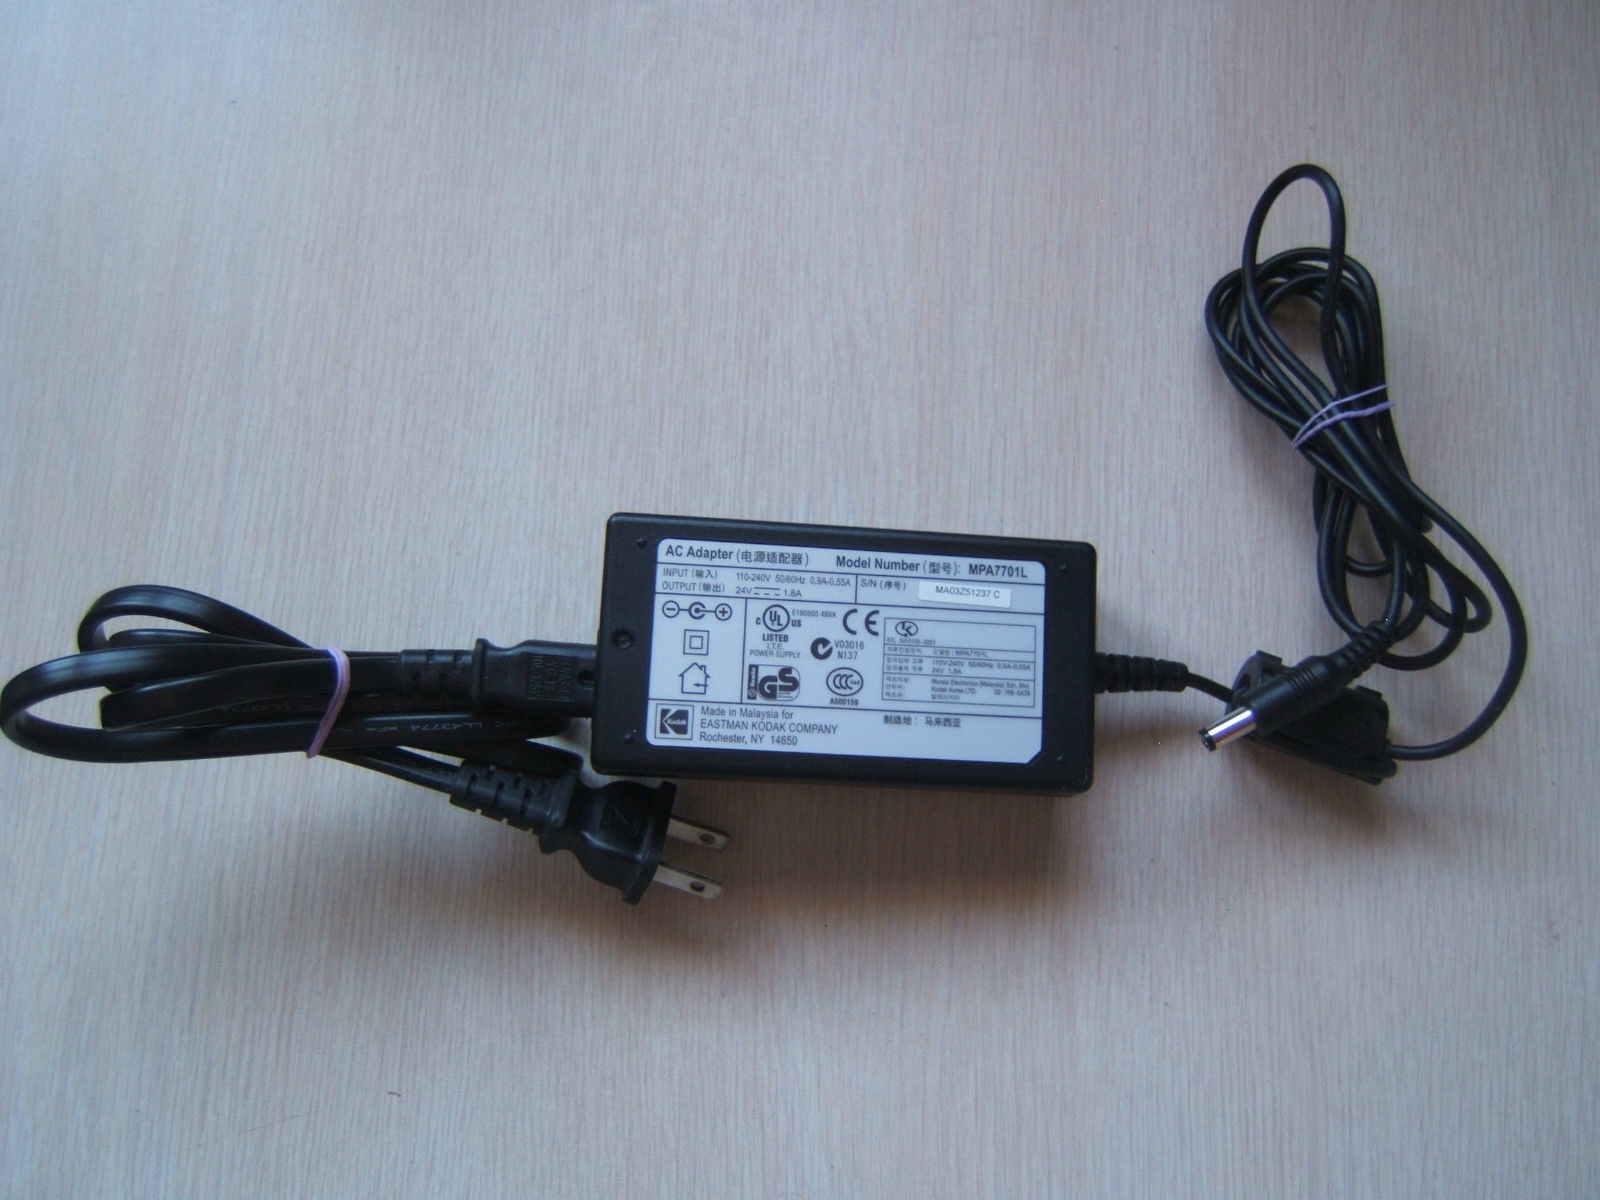 Genuine Kodak EasyShare 4000 AC Adapter Power Supply Cable Cord Brick MPA7701L - $14.59